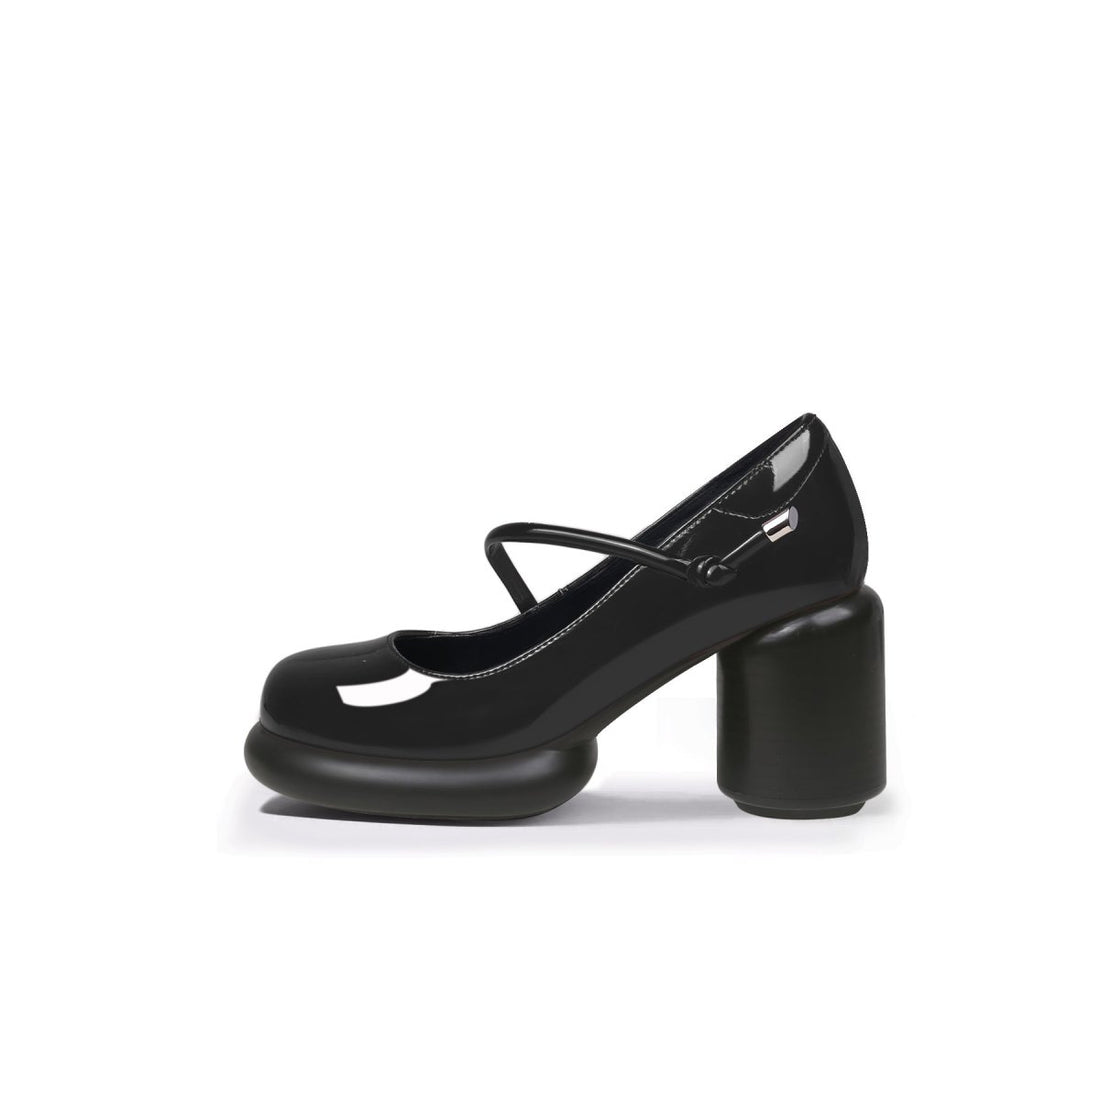 Branch Stool-heel Patent Black Mary Jane Pumps - 0cm